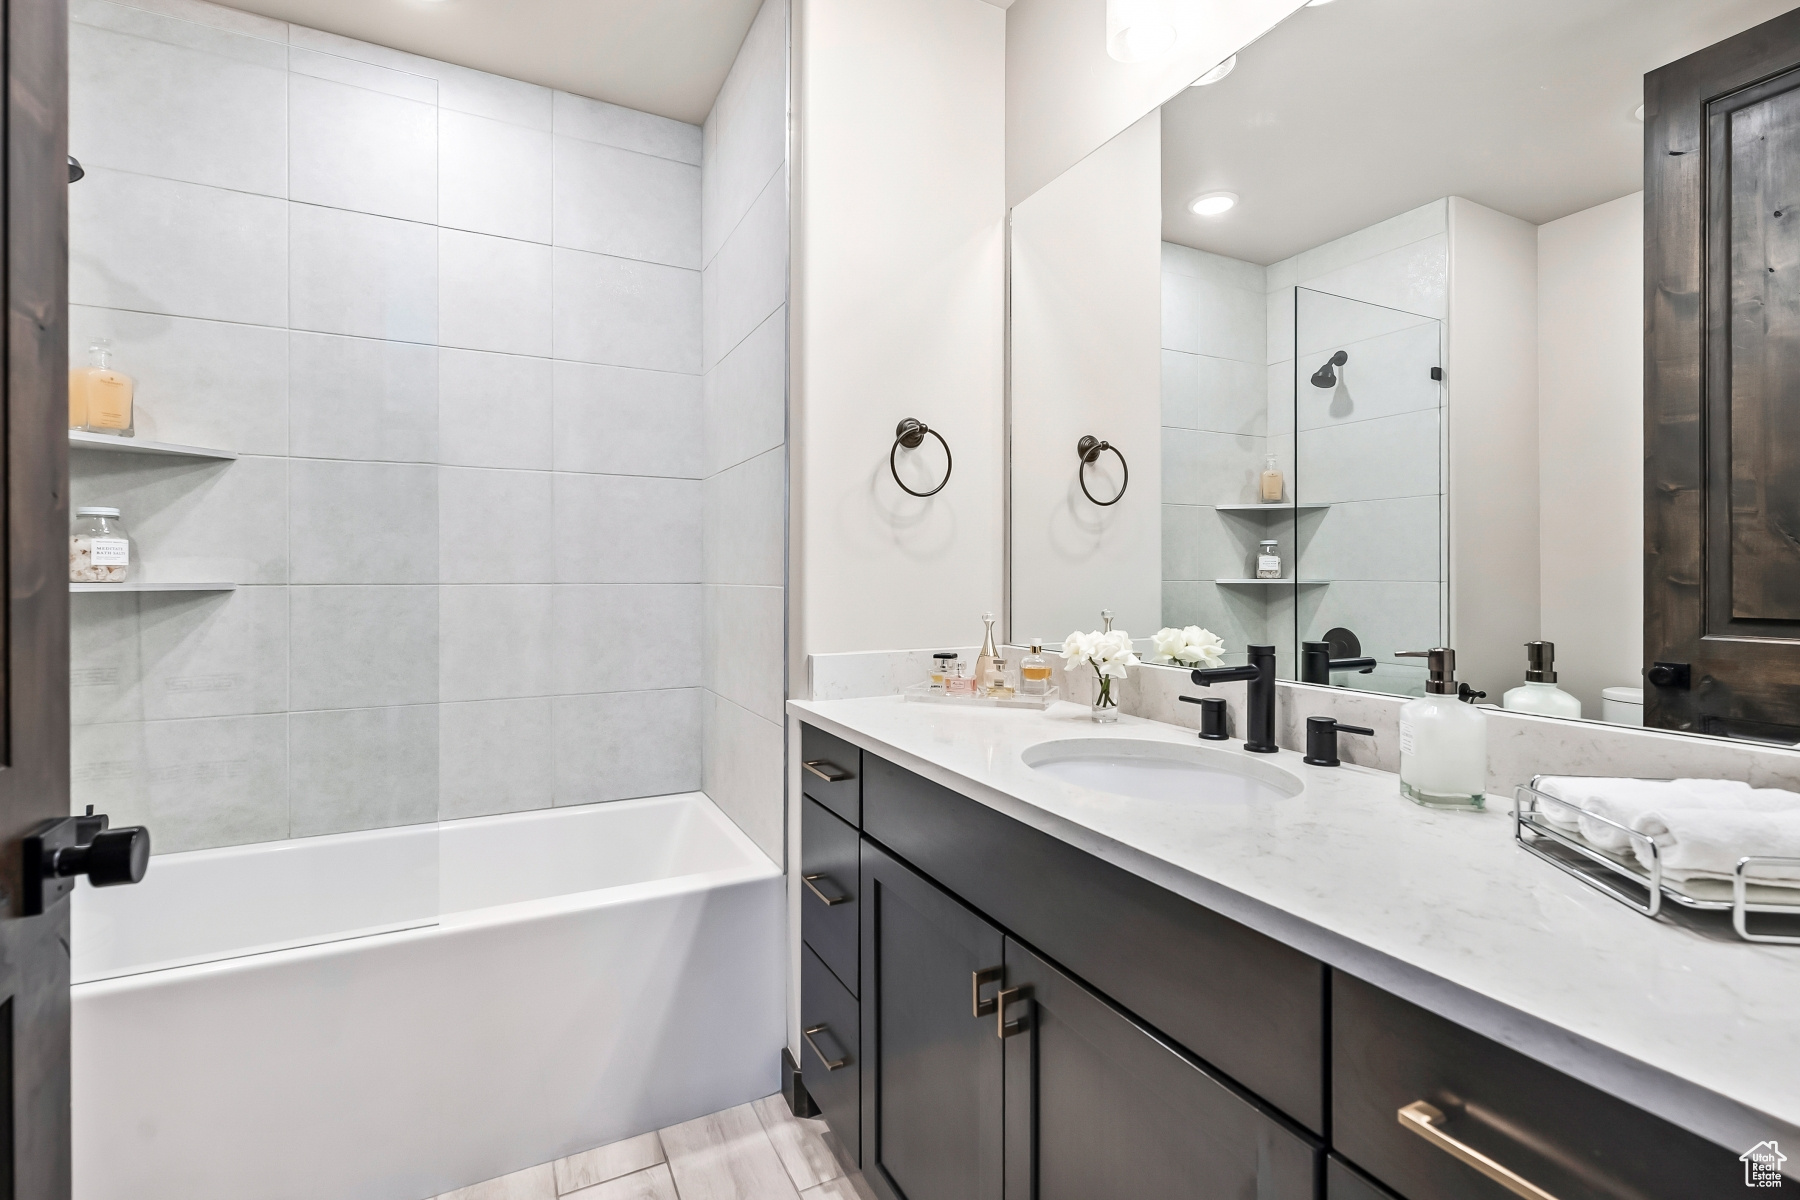 Bathroom featuring tile flooring, tiled shower / bath, and large vanity